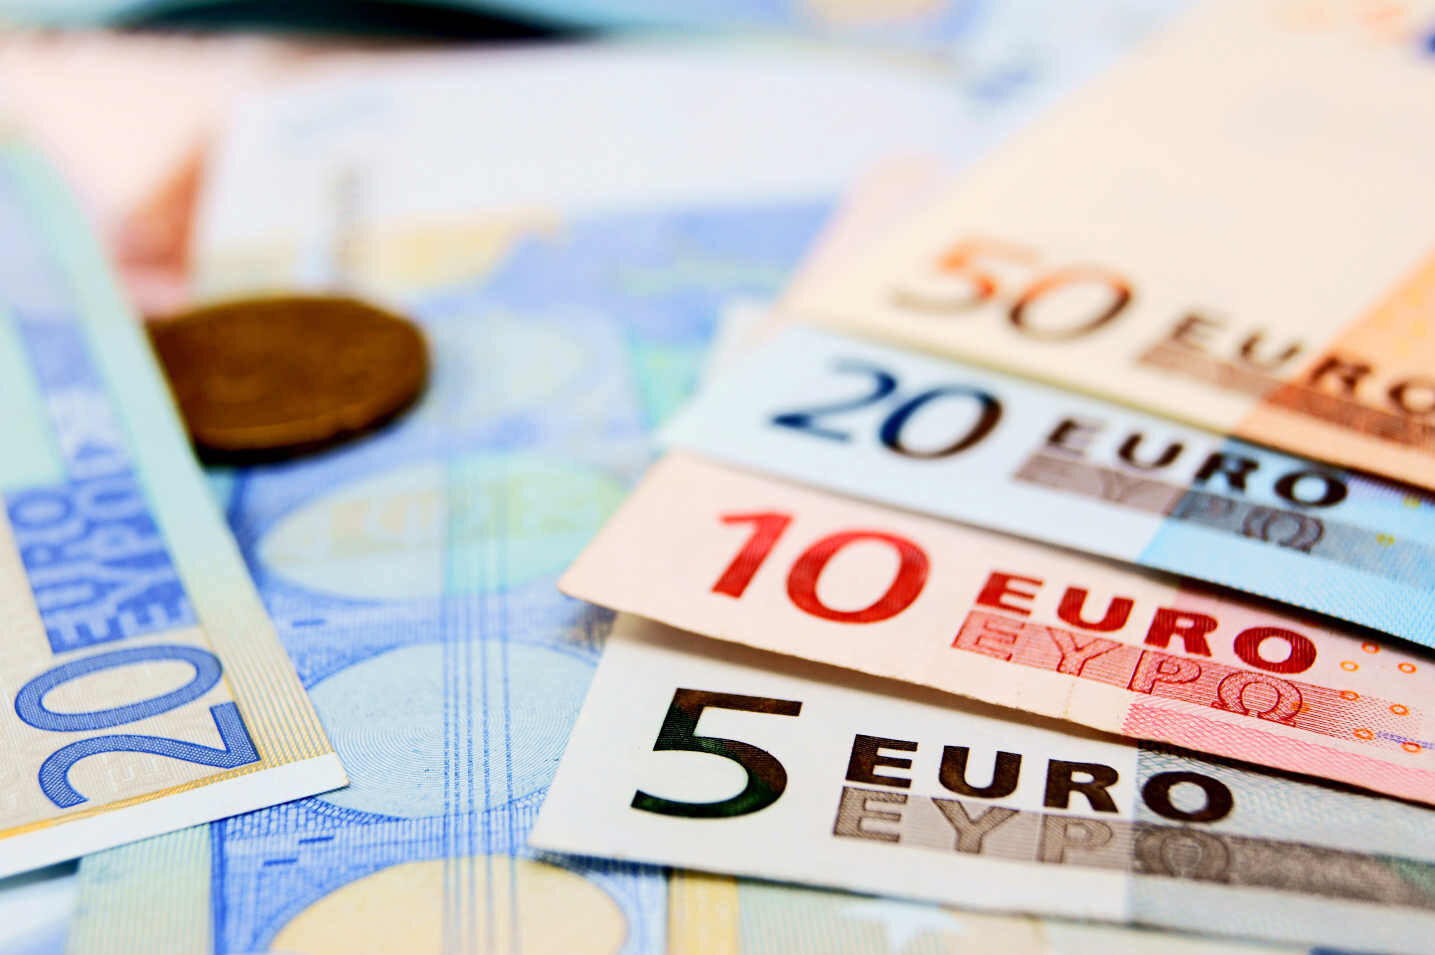 More information about "ΤΑΙΔΕΠ: Προσδοκία για έσοδα 2 δισ ευρώ από αποκρατικοποιήσεις"